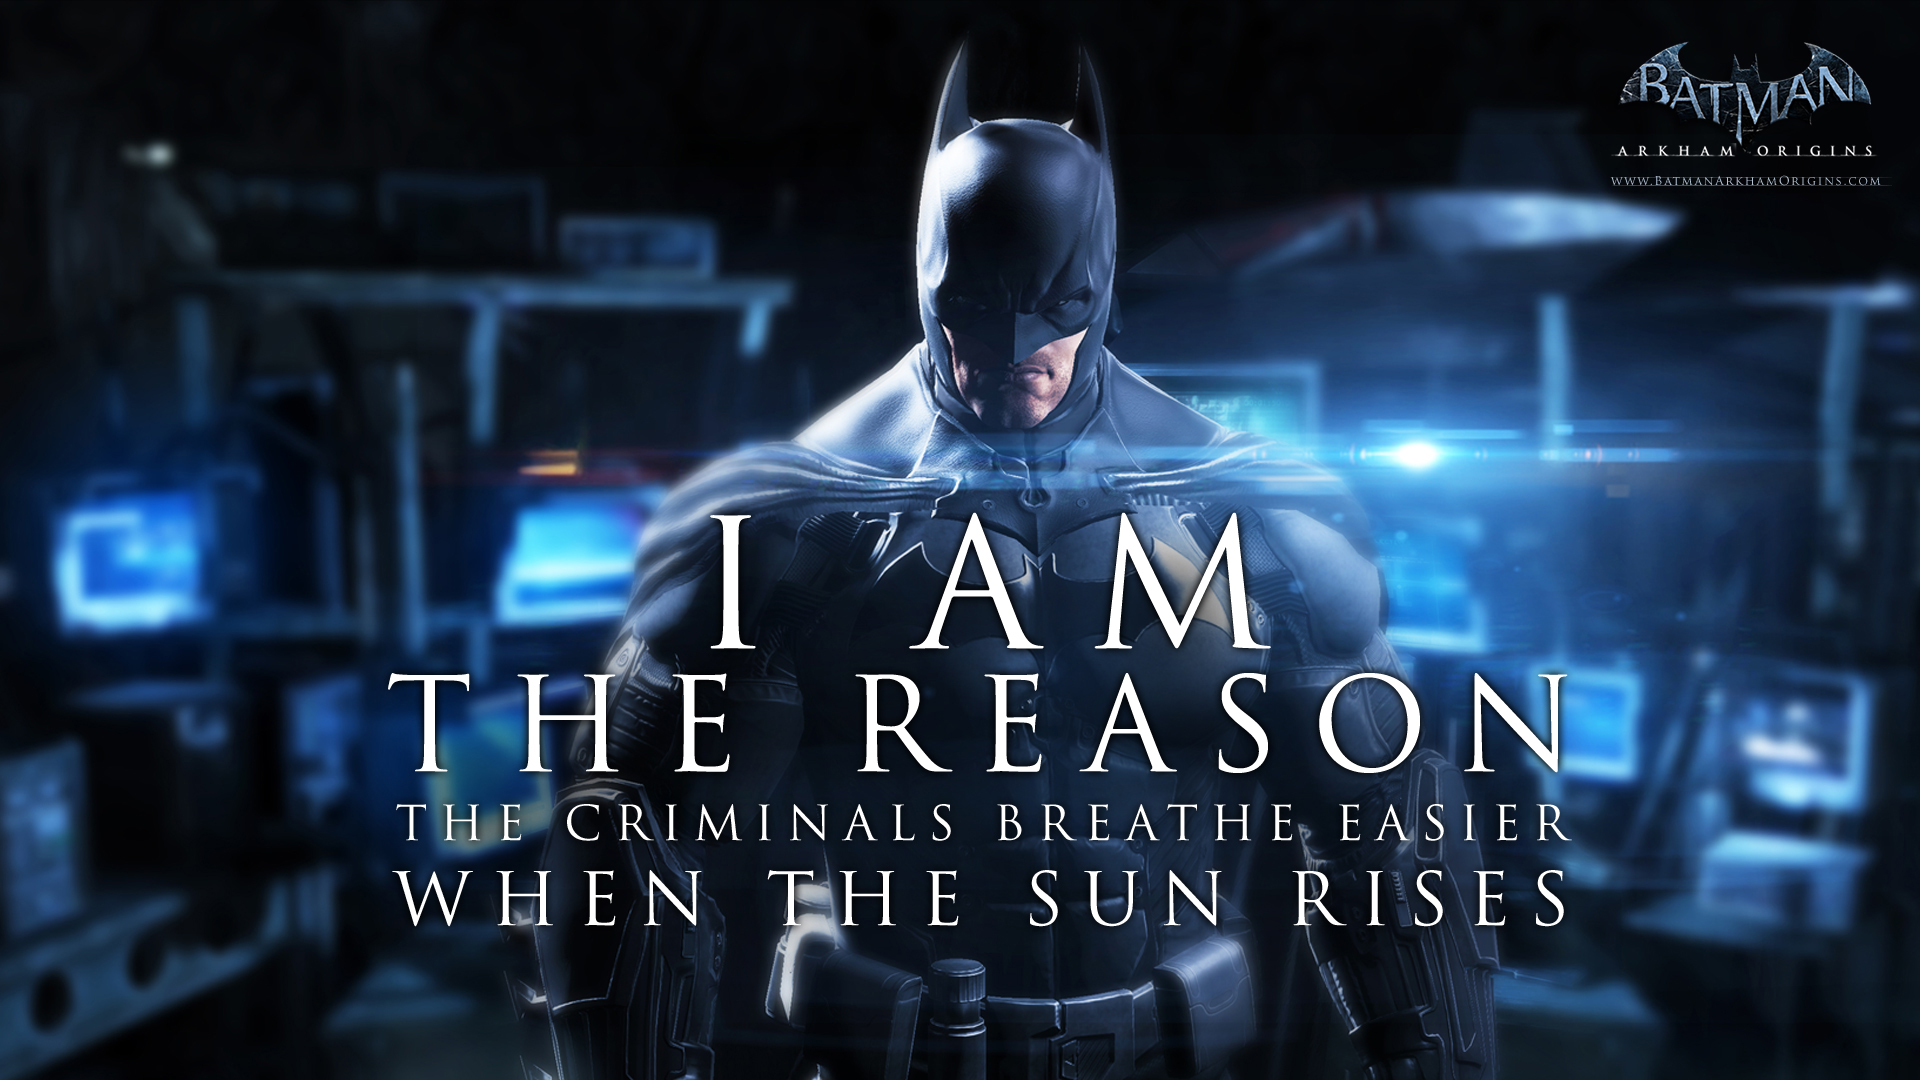 batman: arkham origins, batman, video game